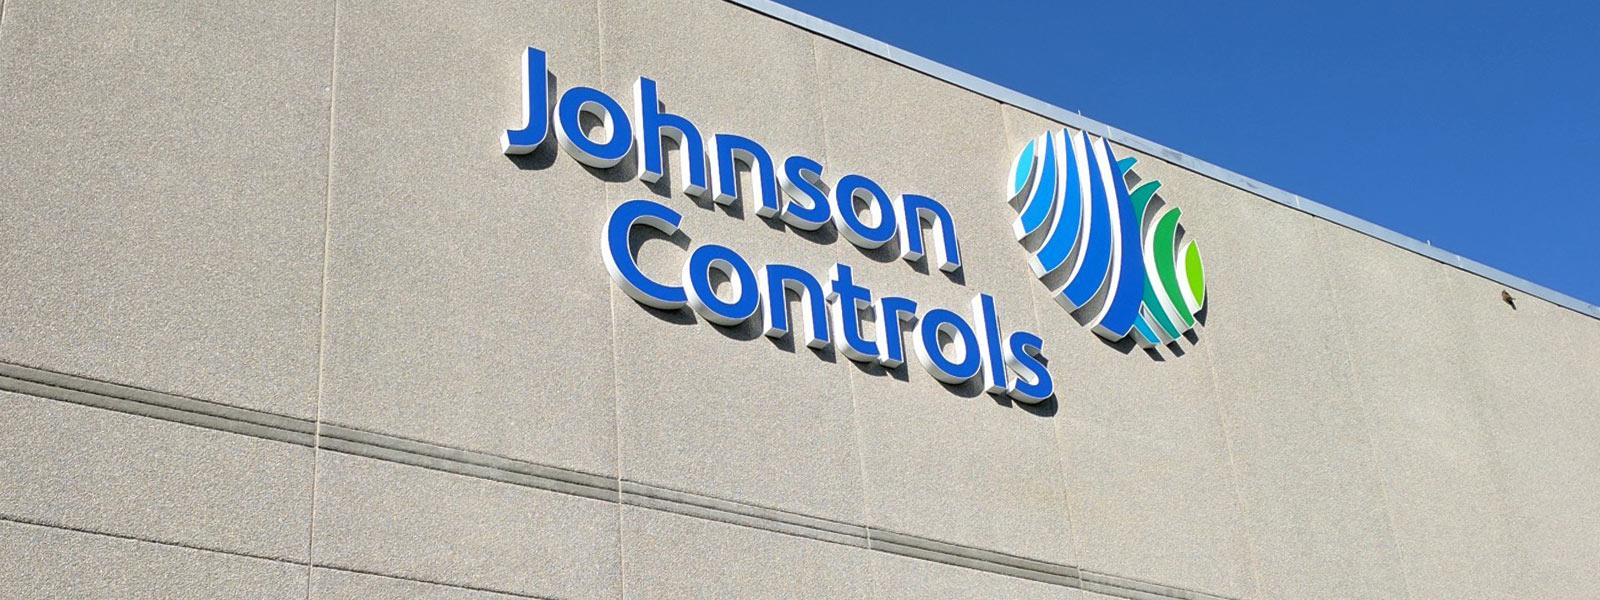 Johnson Controls Exterior Letters